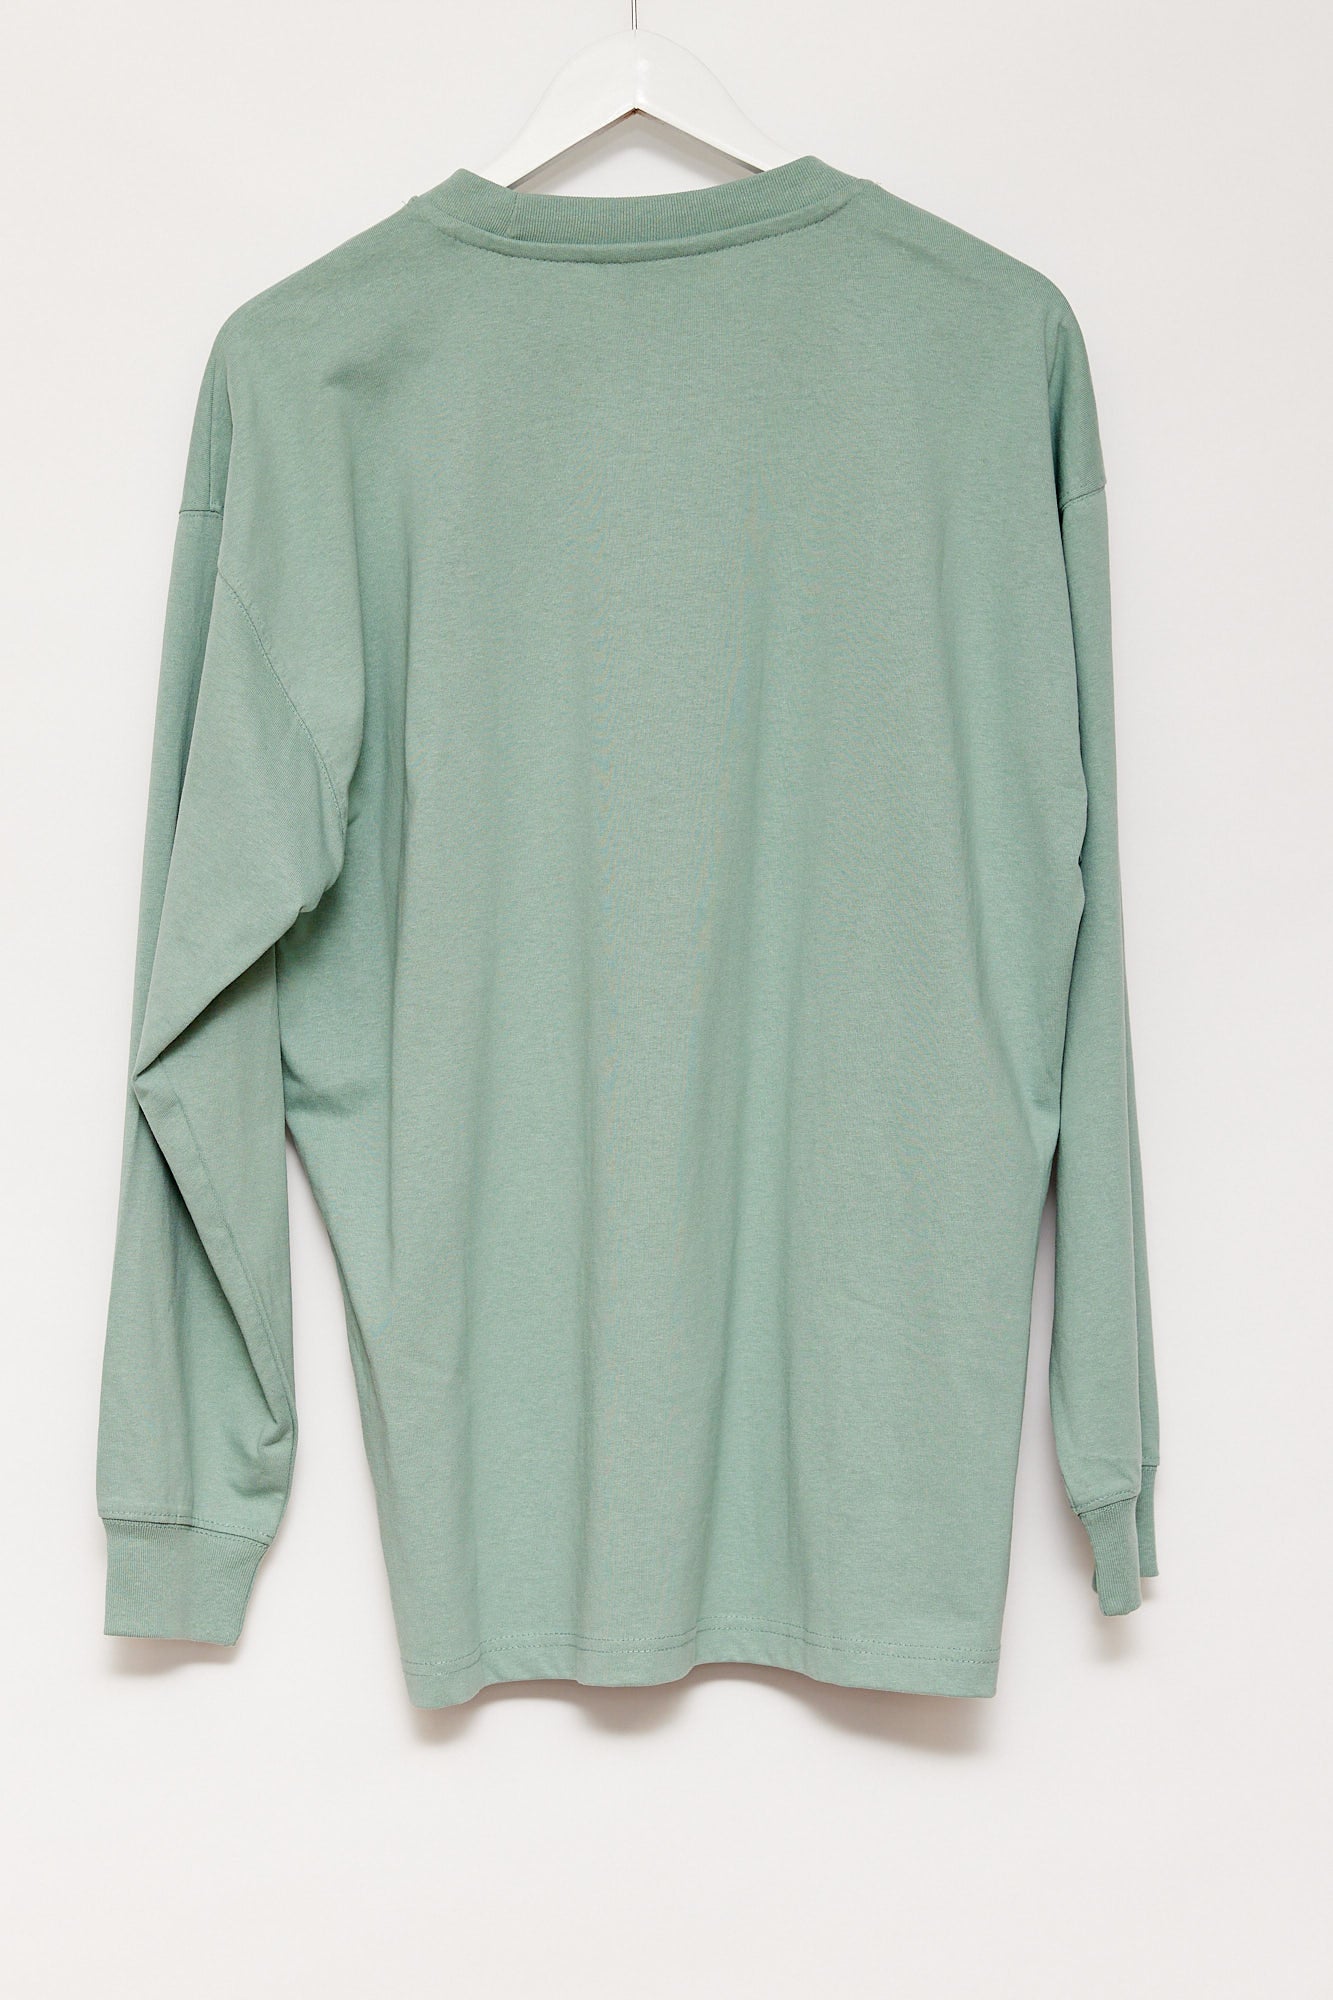 Mens H&M green sweatshirt style T-shirt size medium